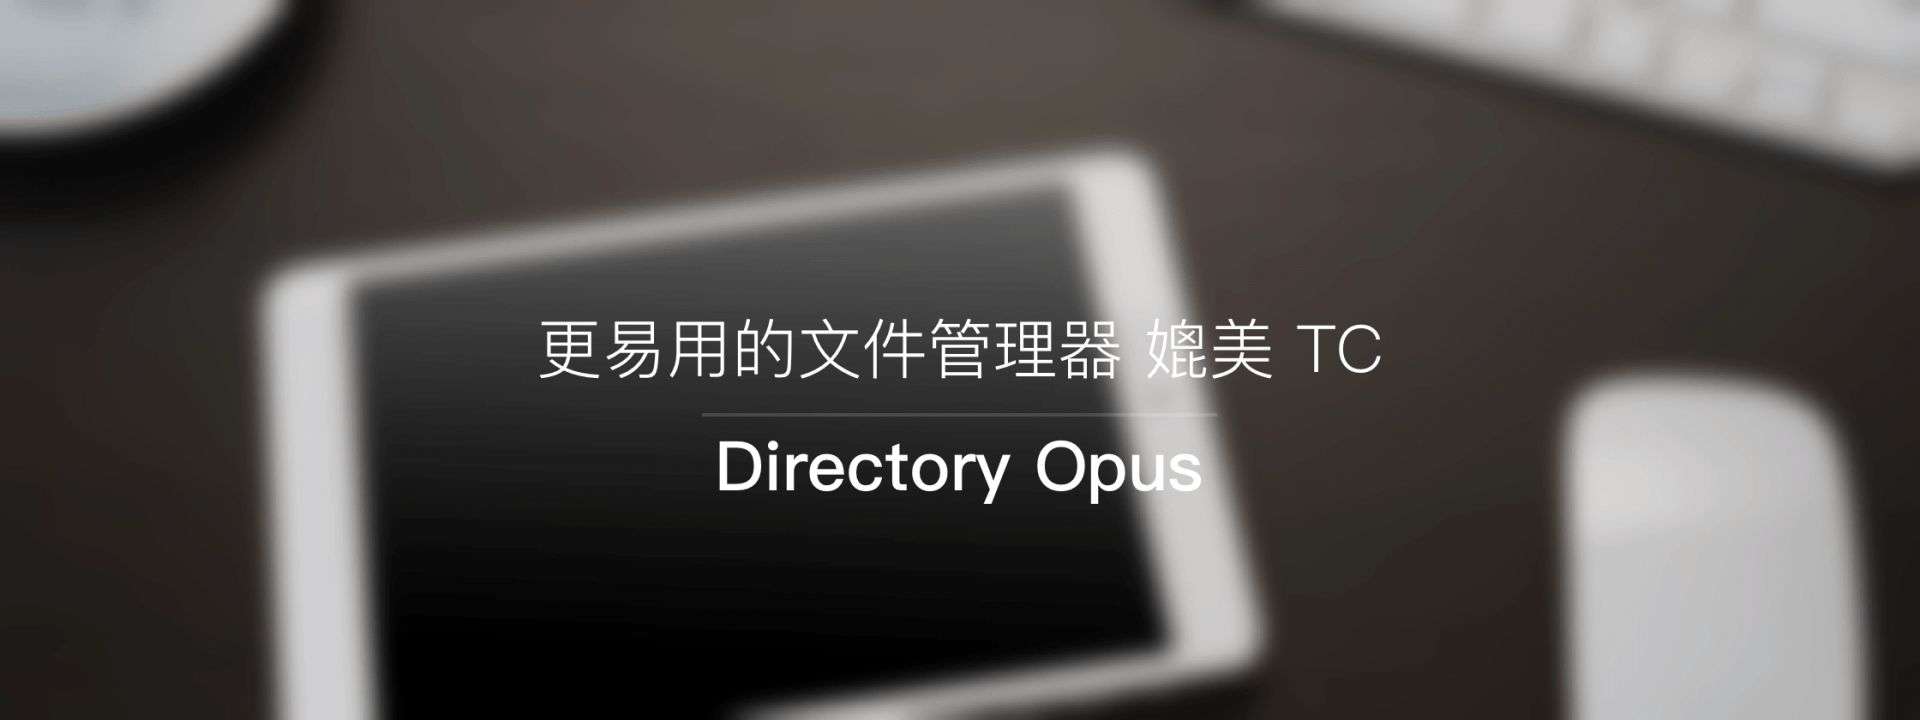 Directory Opus 12.31破解版免费下载附安装破解教程-哇哦菌